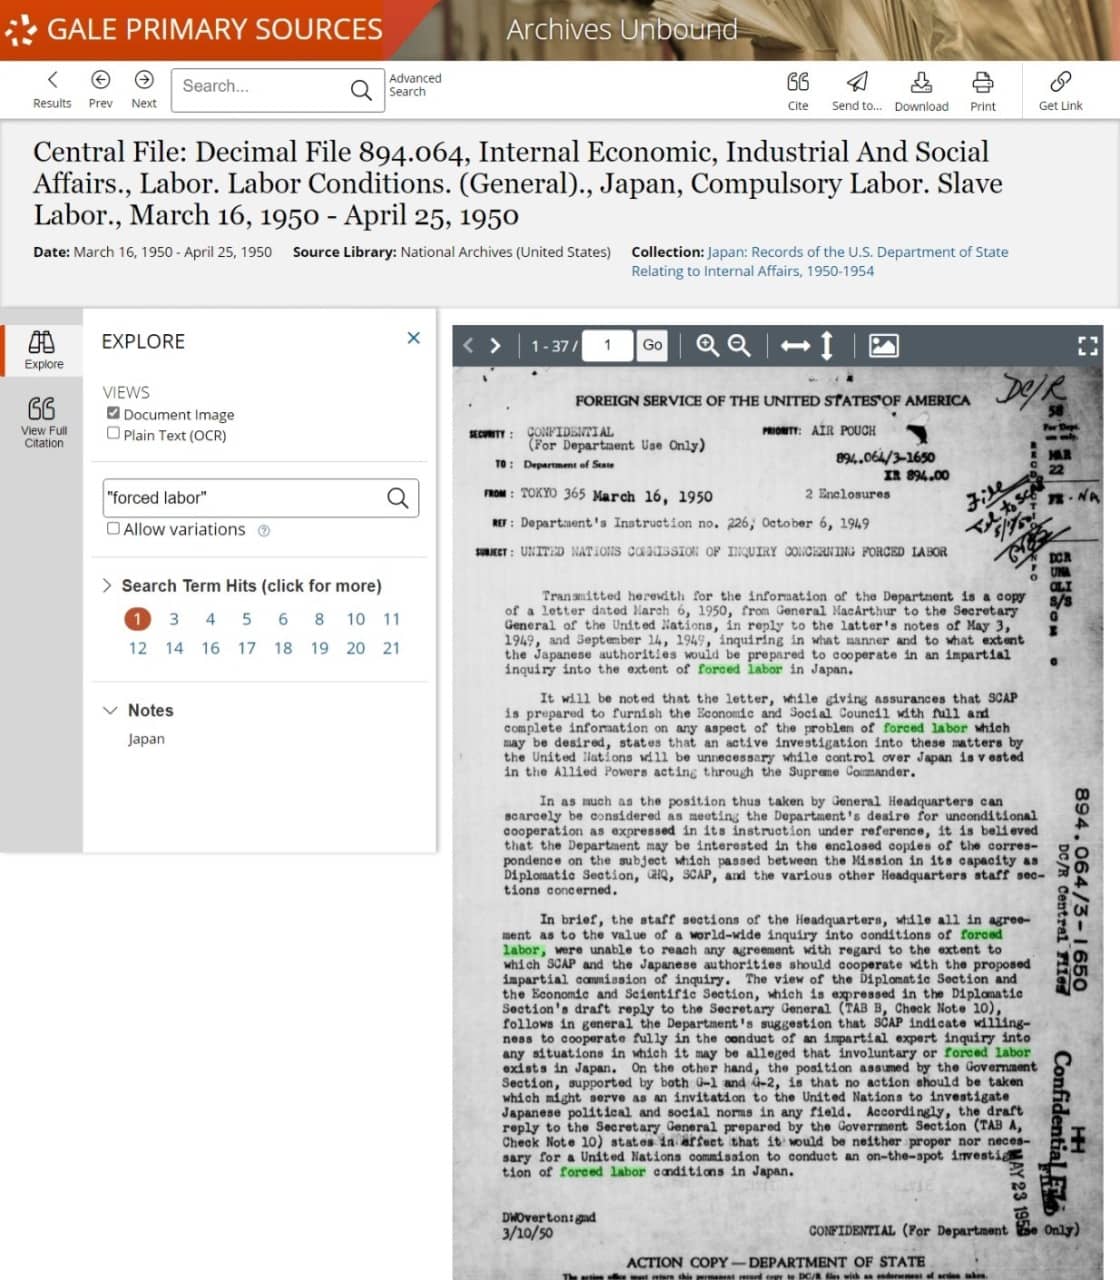 Central File: Decimal File 894.064, Internal Economic, Industrial And Social Affairs., Labor. Labor Conditions. (General)., Japan, Compulsory Labor. Slave Labor., March 16, 1950 - April 25, 1950.